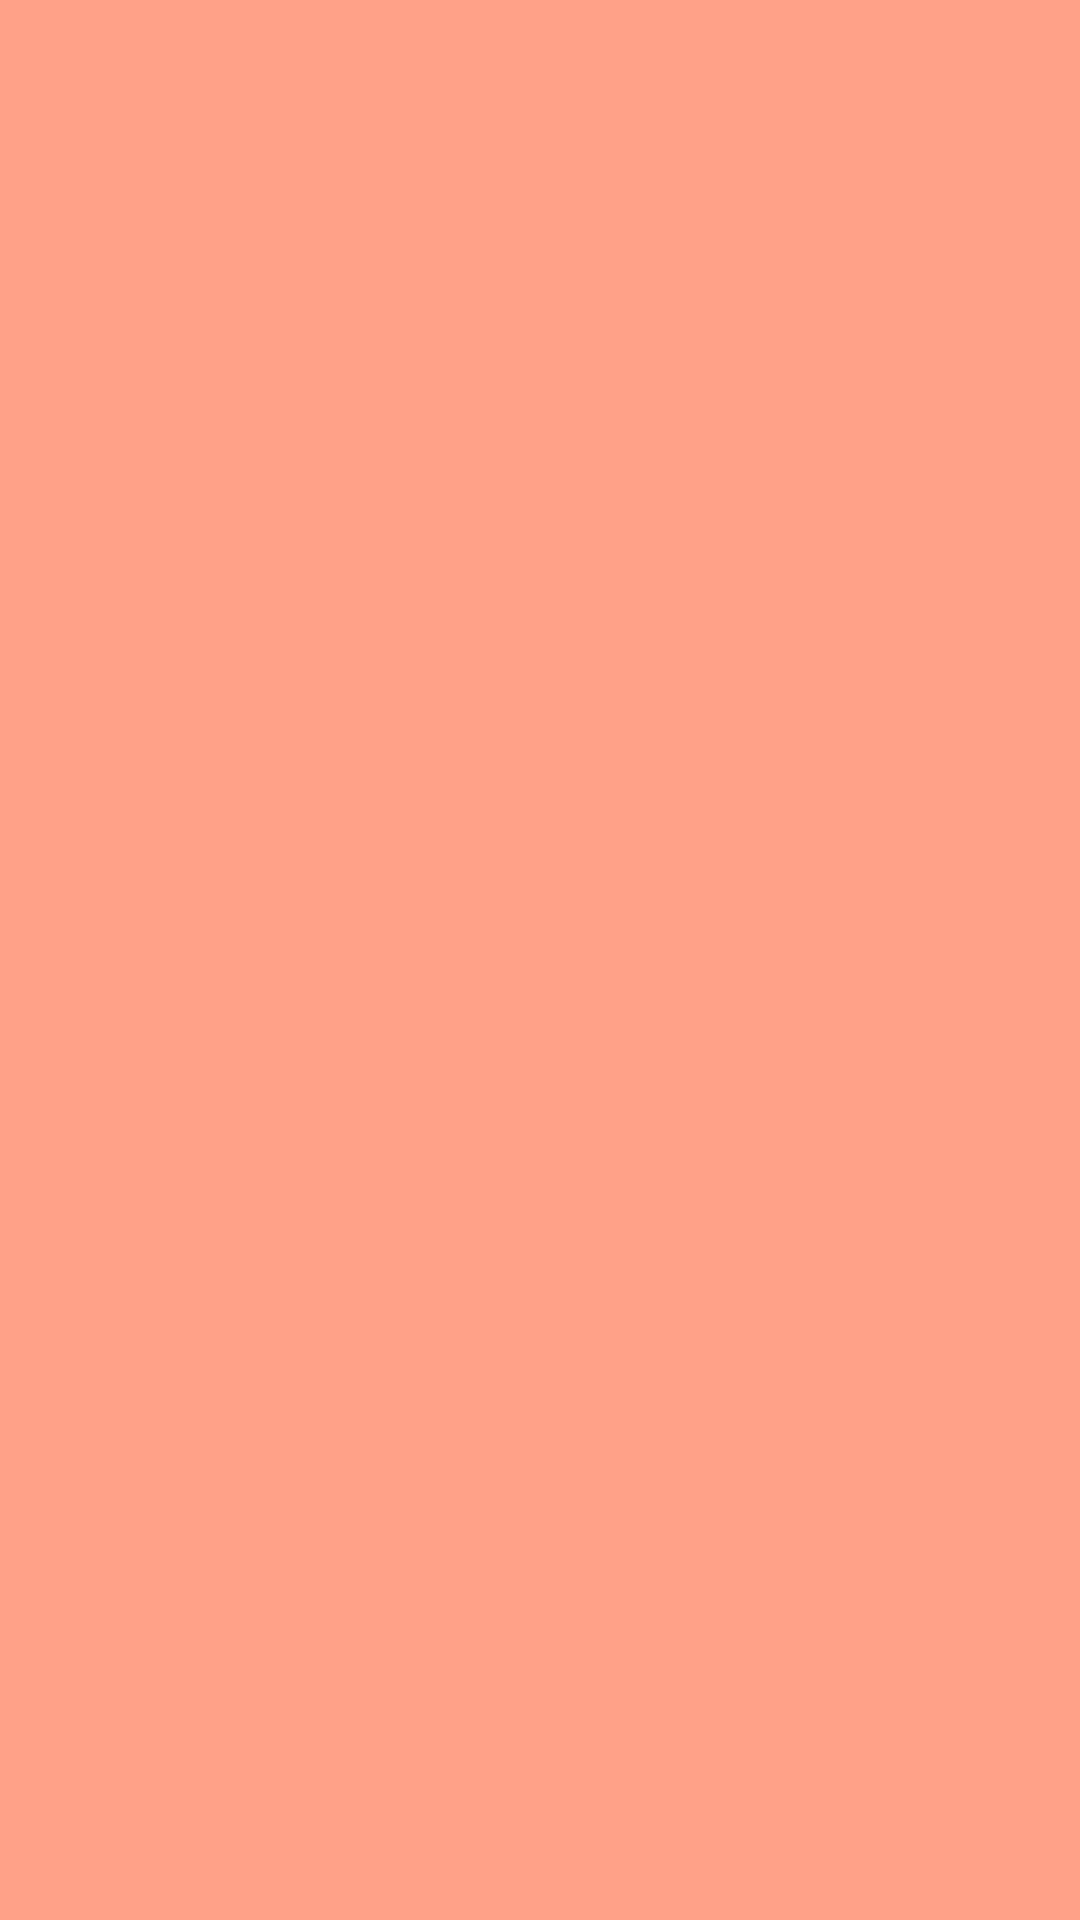 1080x1920 Vivid Tangerine Solid Color Background